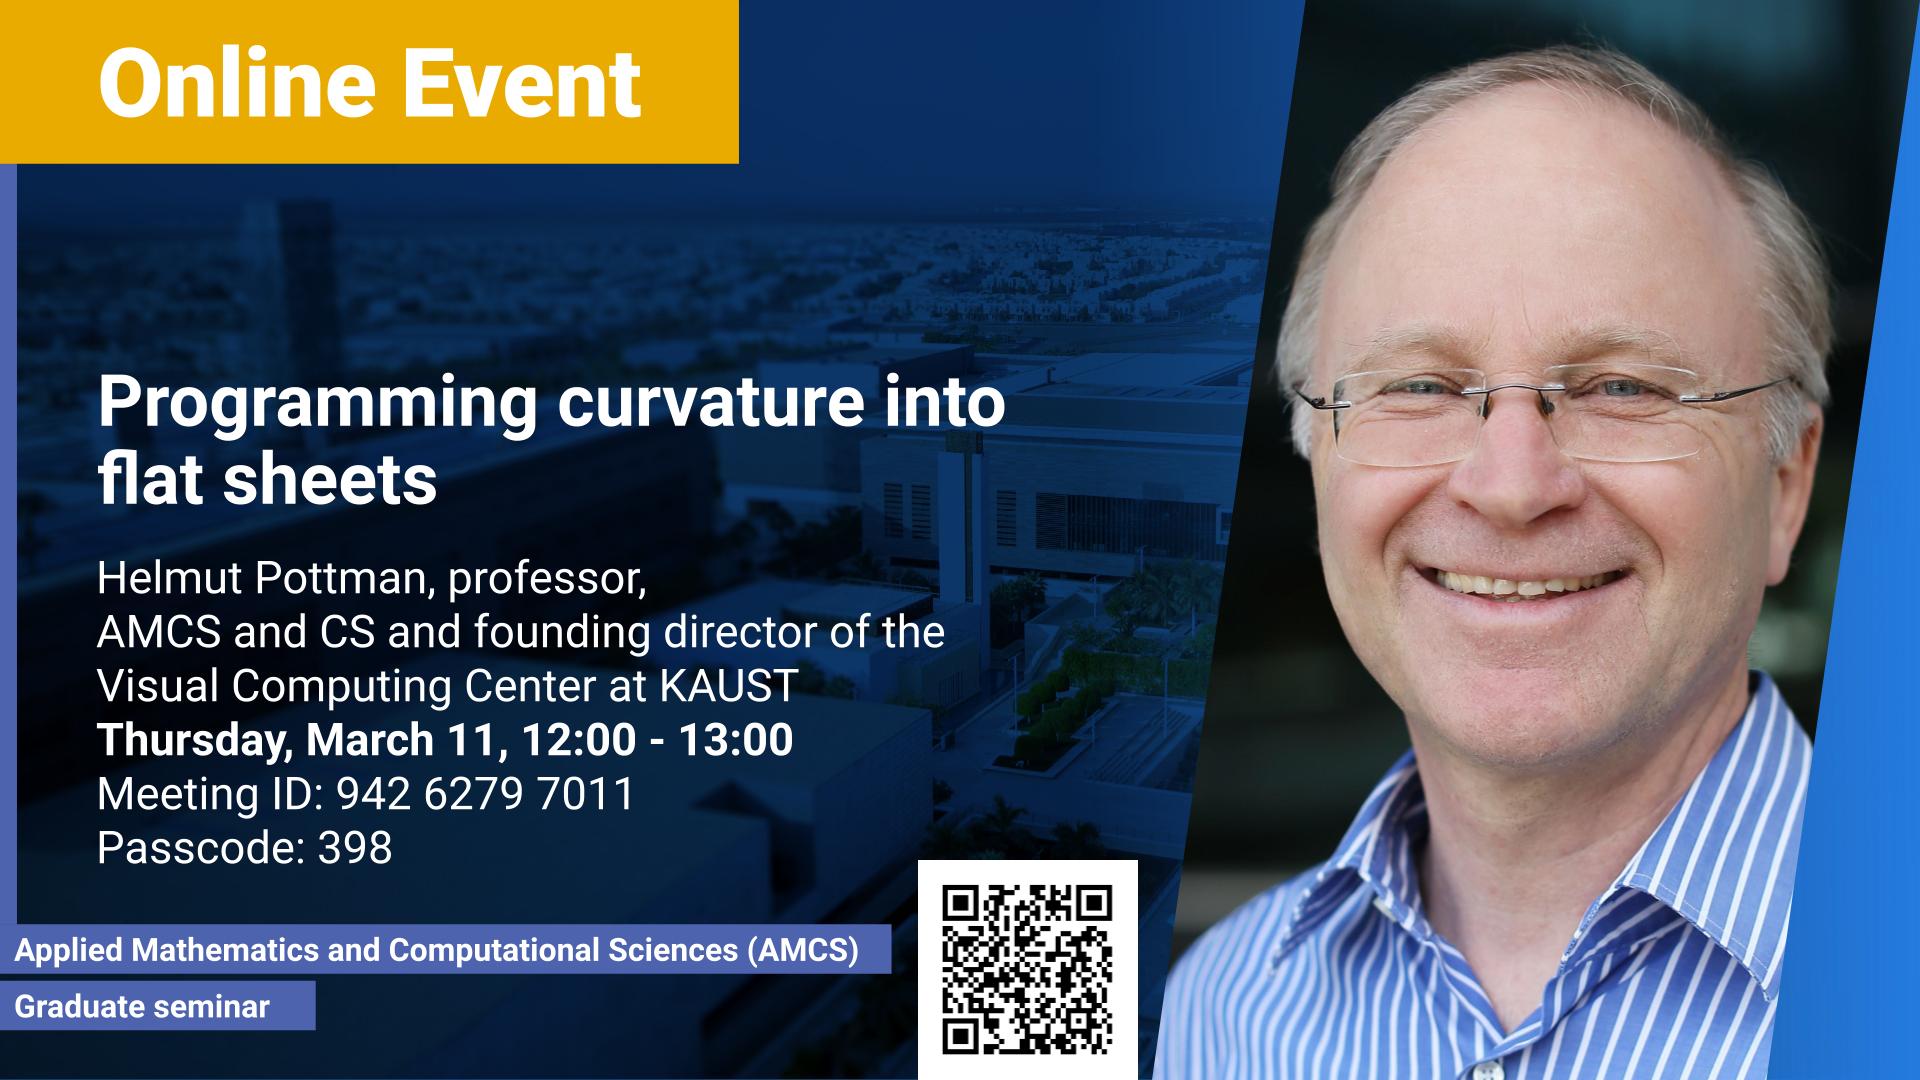 KAUST-CEMSE-AMCS-Graduate-Seminar-Helmut-Pottman-Programming-curvature-into-flat-sheets.jpg